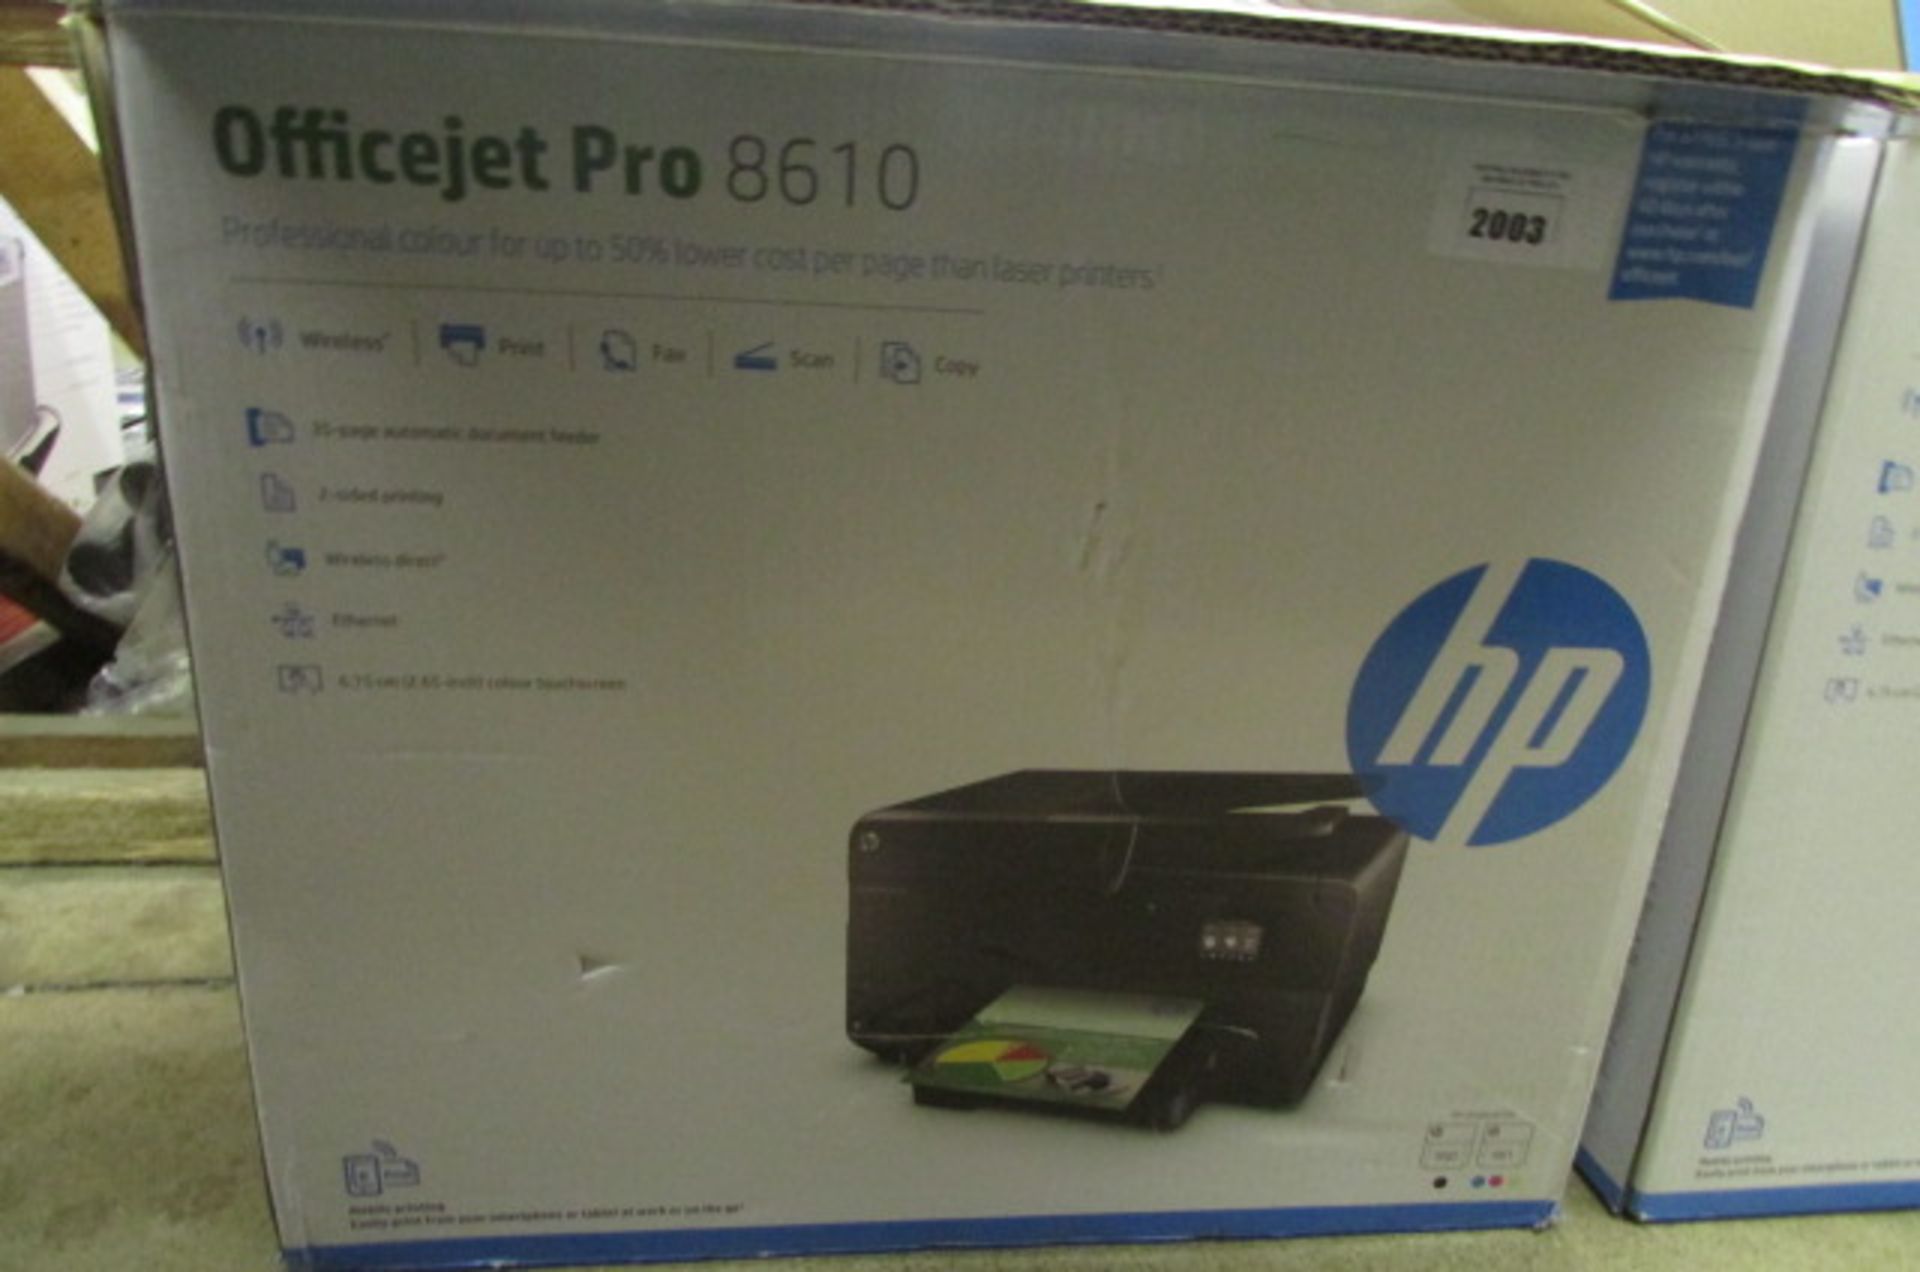 HP Officejet Pro 8610 wireless all in one printer in box